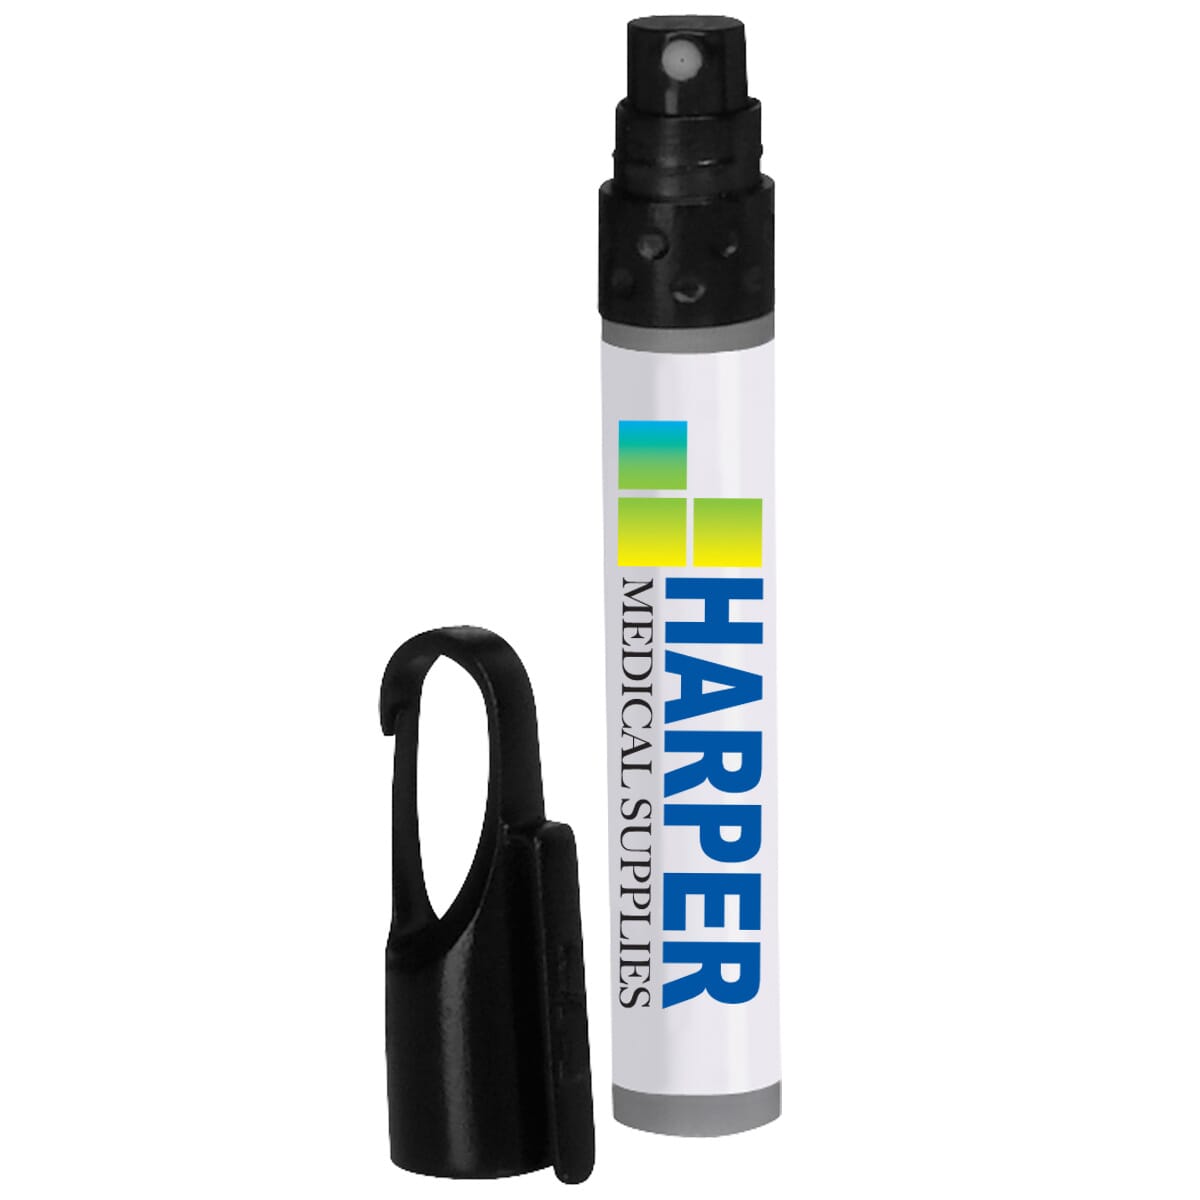 Travel hand sanitizer spray pen